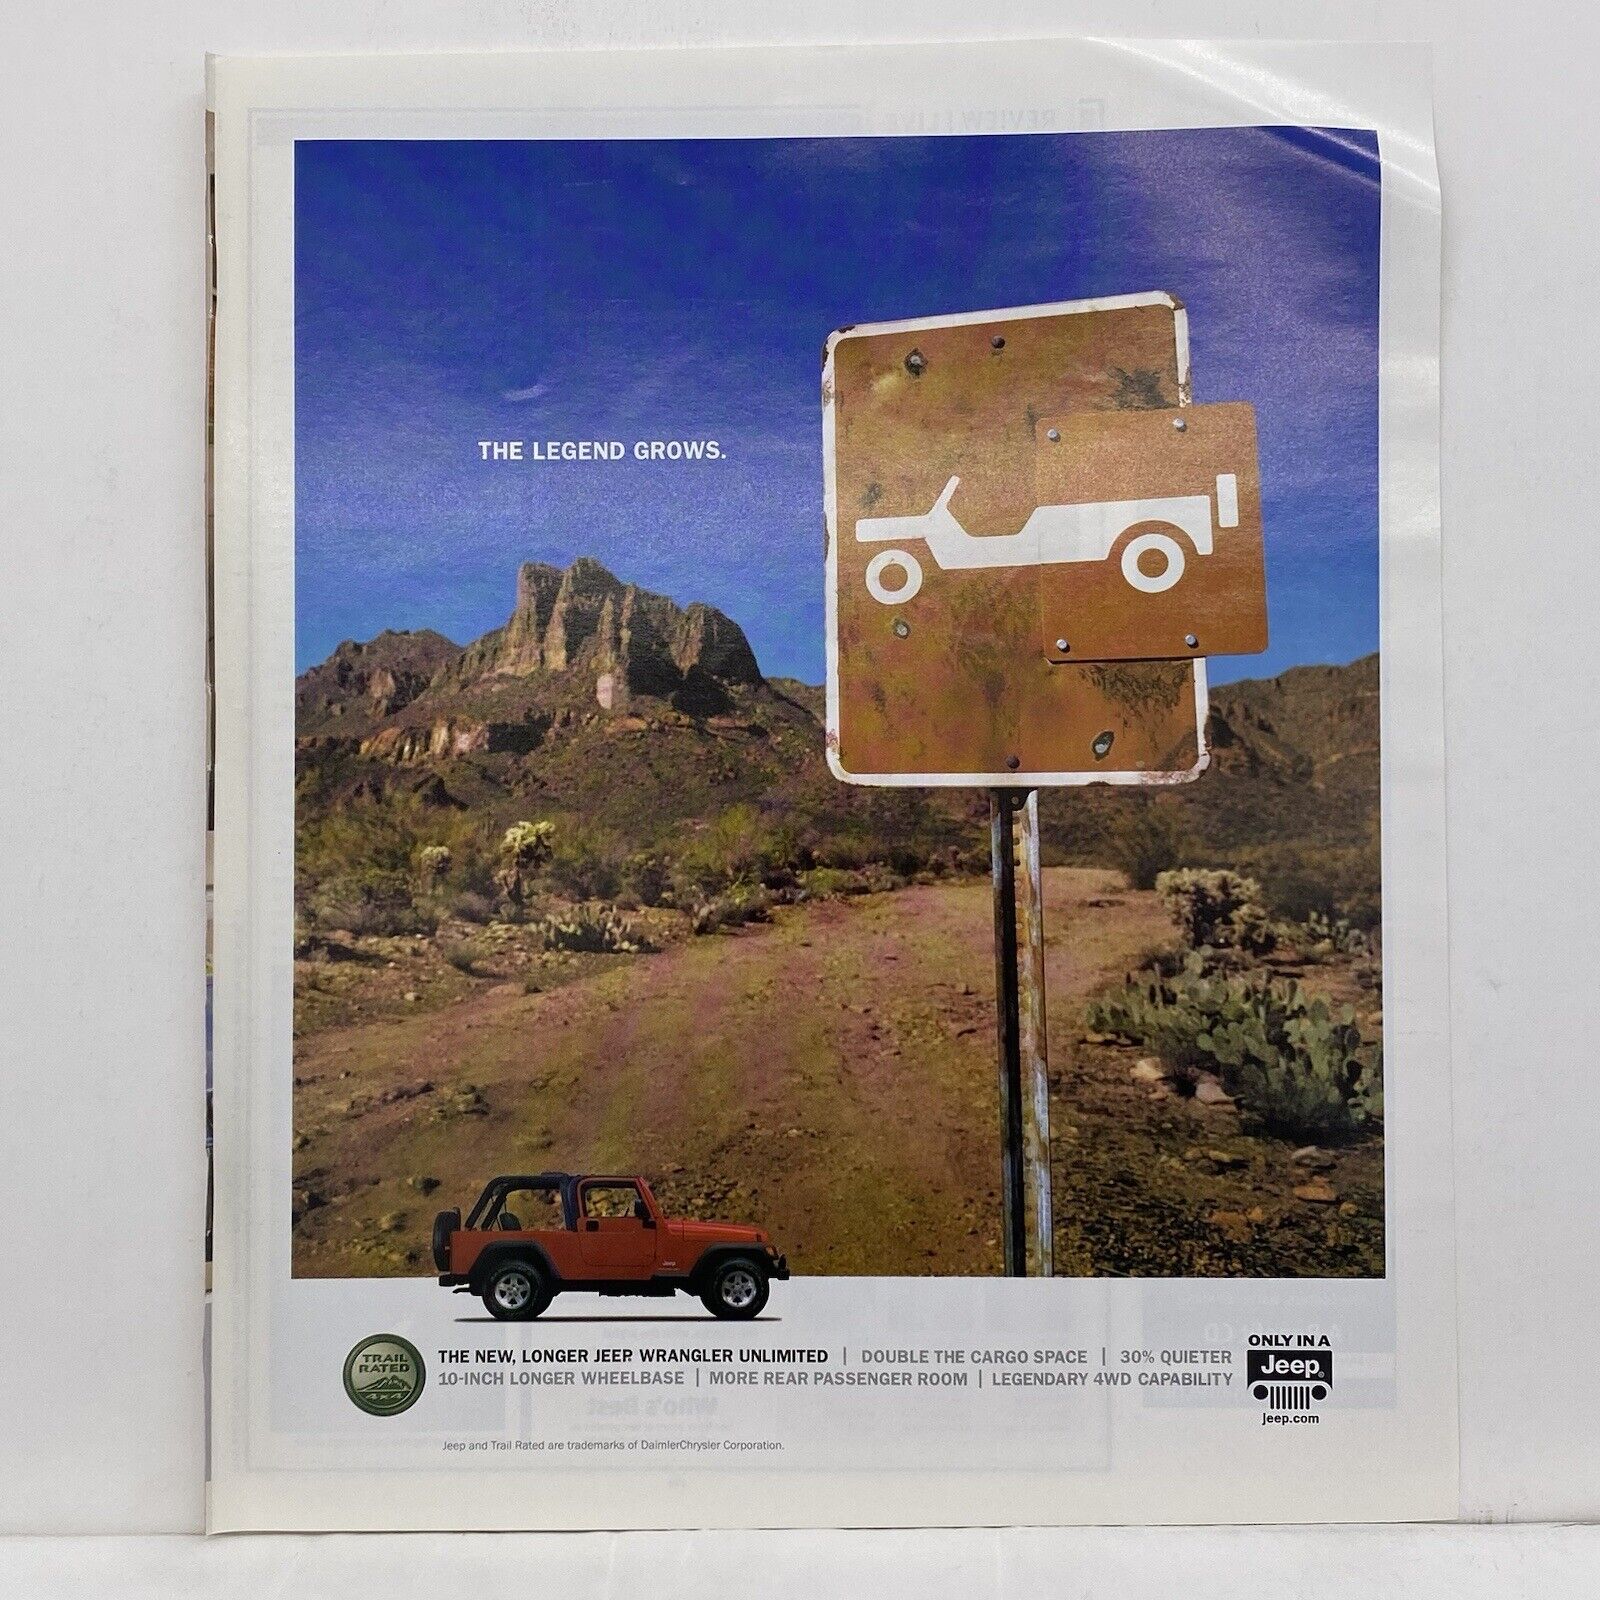 2004 Jeep PRINT AD Red Wrangler 4x4 SUV Photo Mountain Terrain Vintage Poster